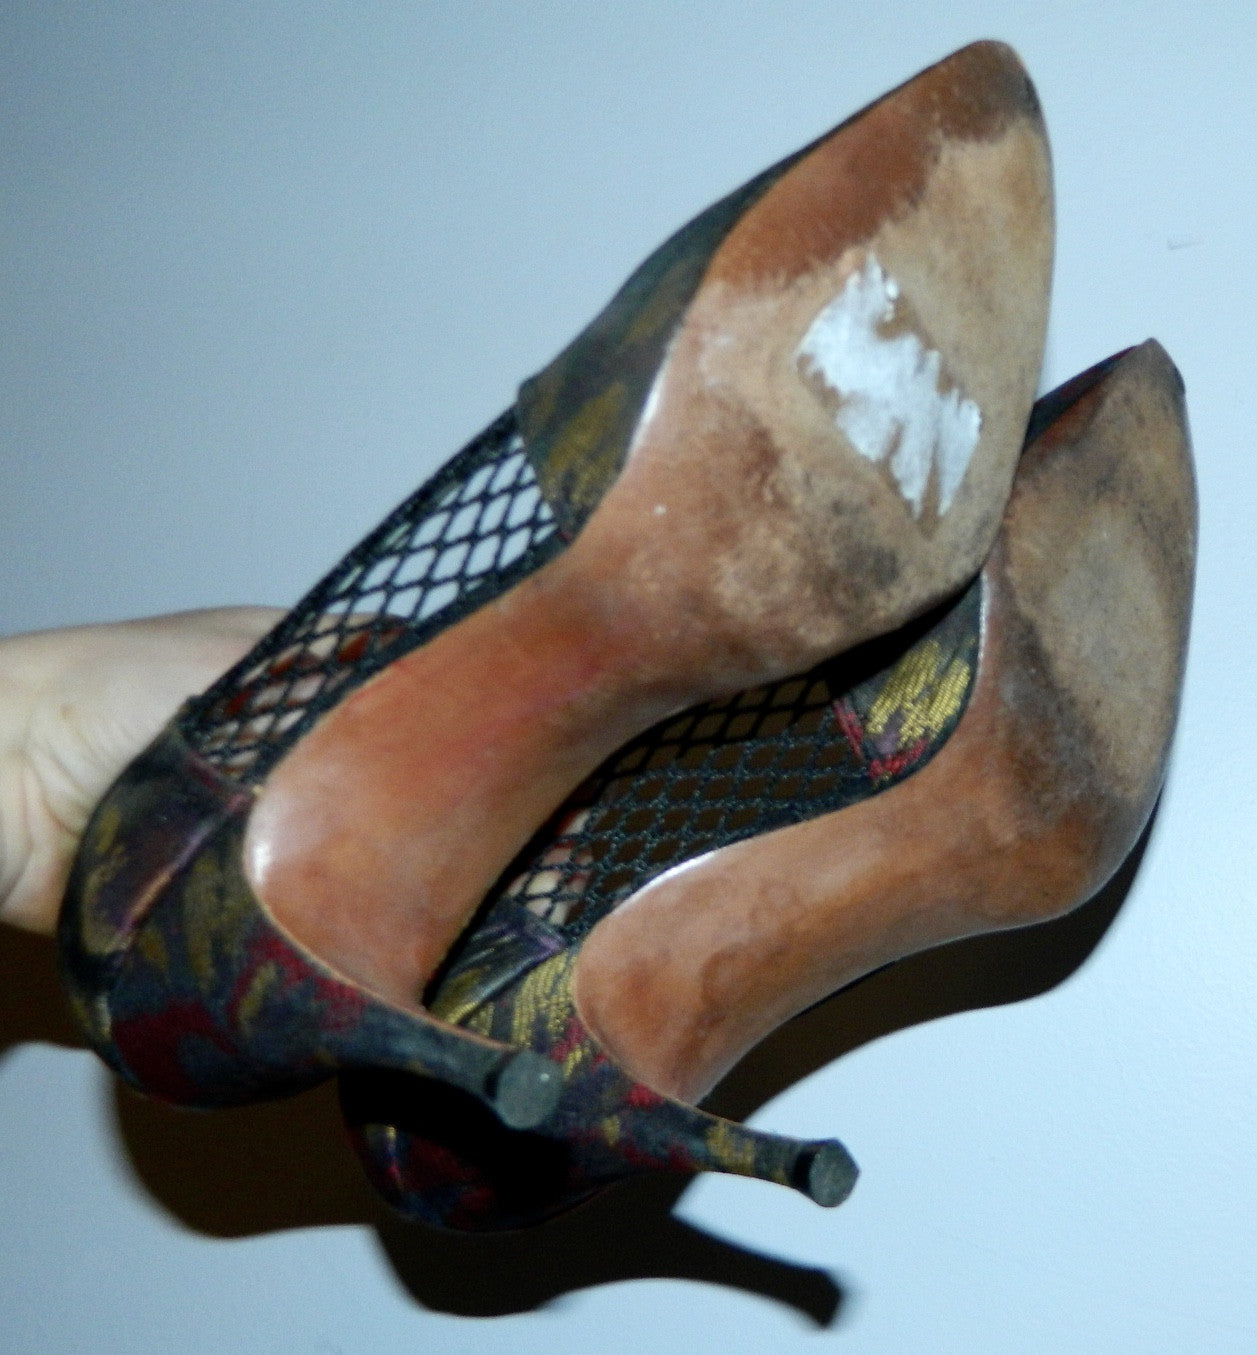 vintage 1950s stiletto heels / floral brocade high heels / black mesh cutouts US 6 - 7